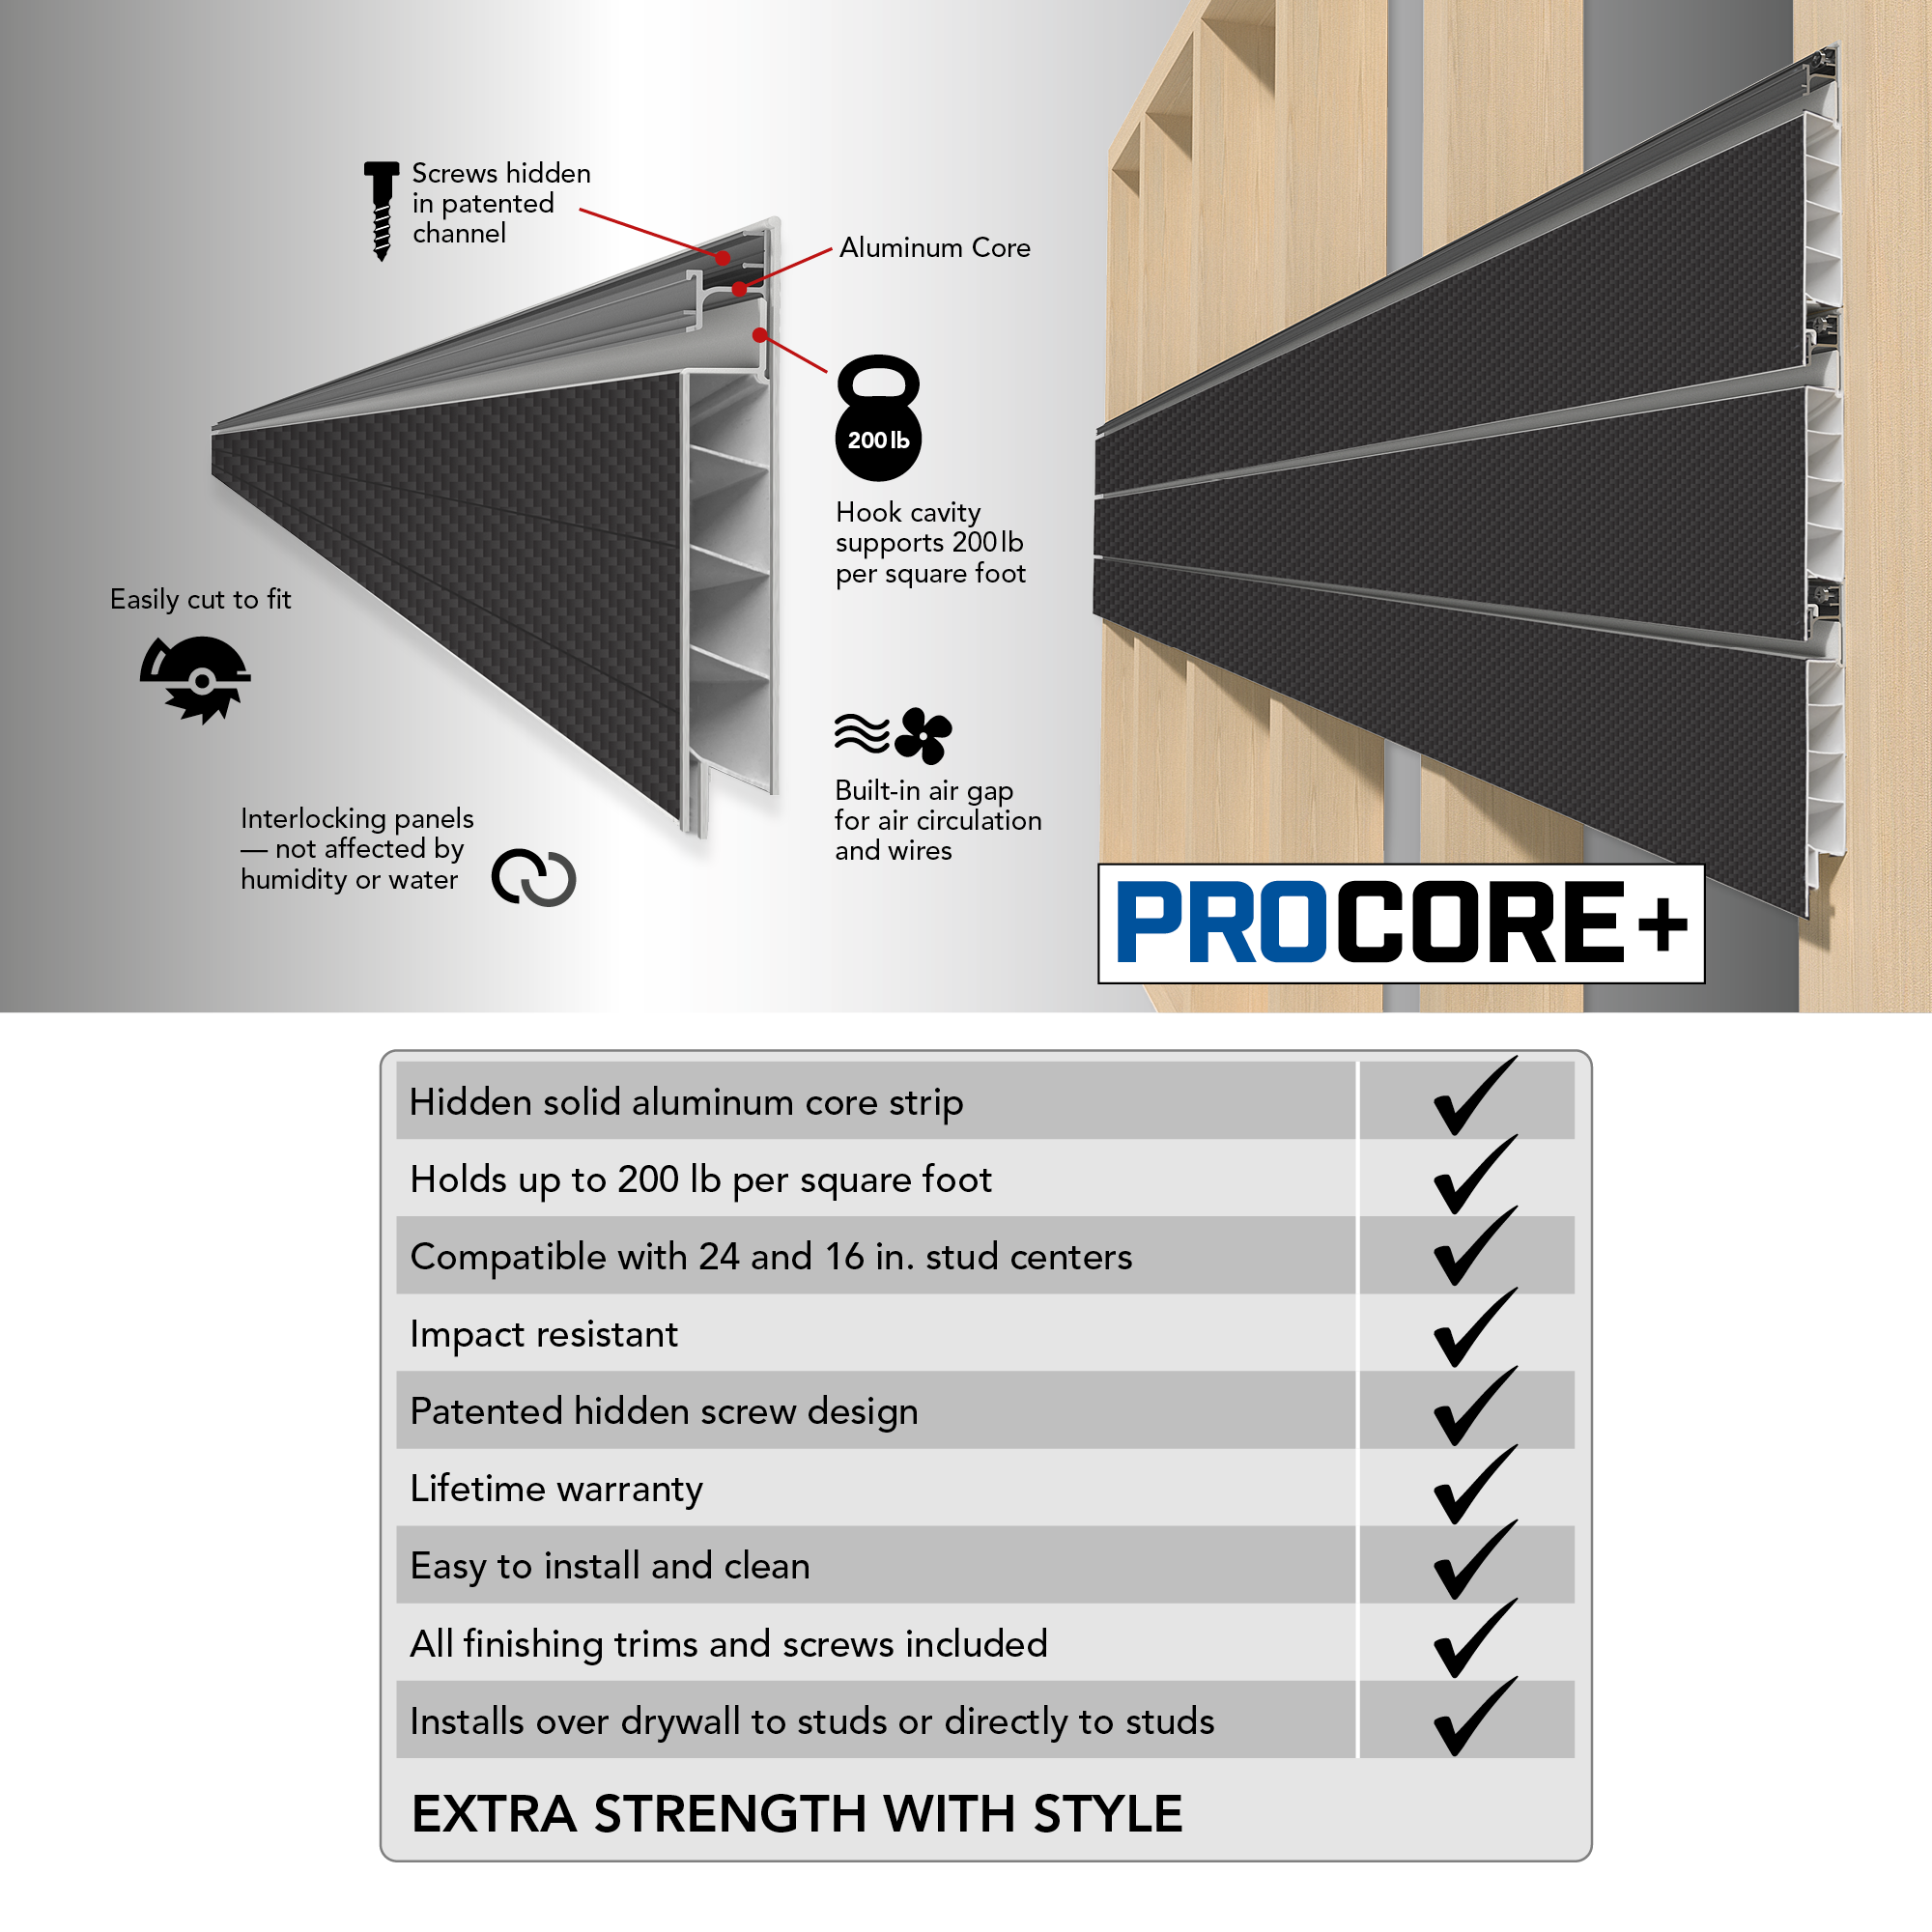 4 x 8 ft. PROCORE+ Black Carbon Fiber PVC Slatwall – 2 Pack 64 sq ft